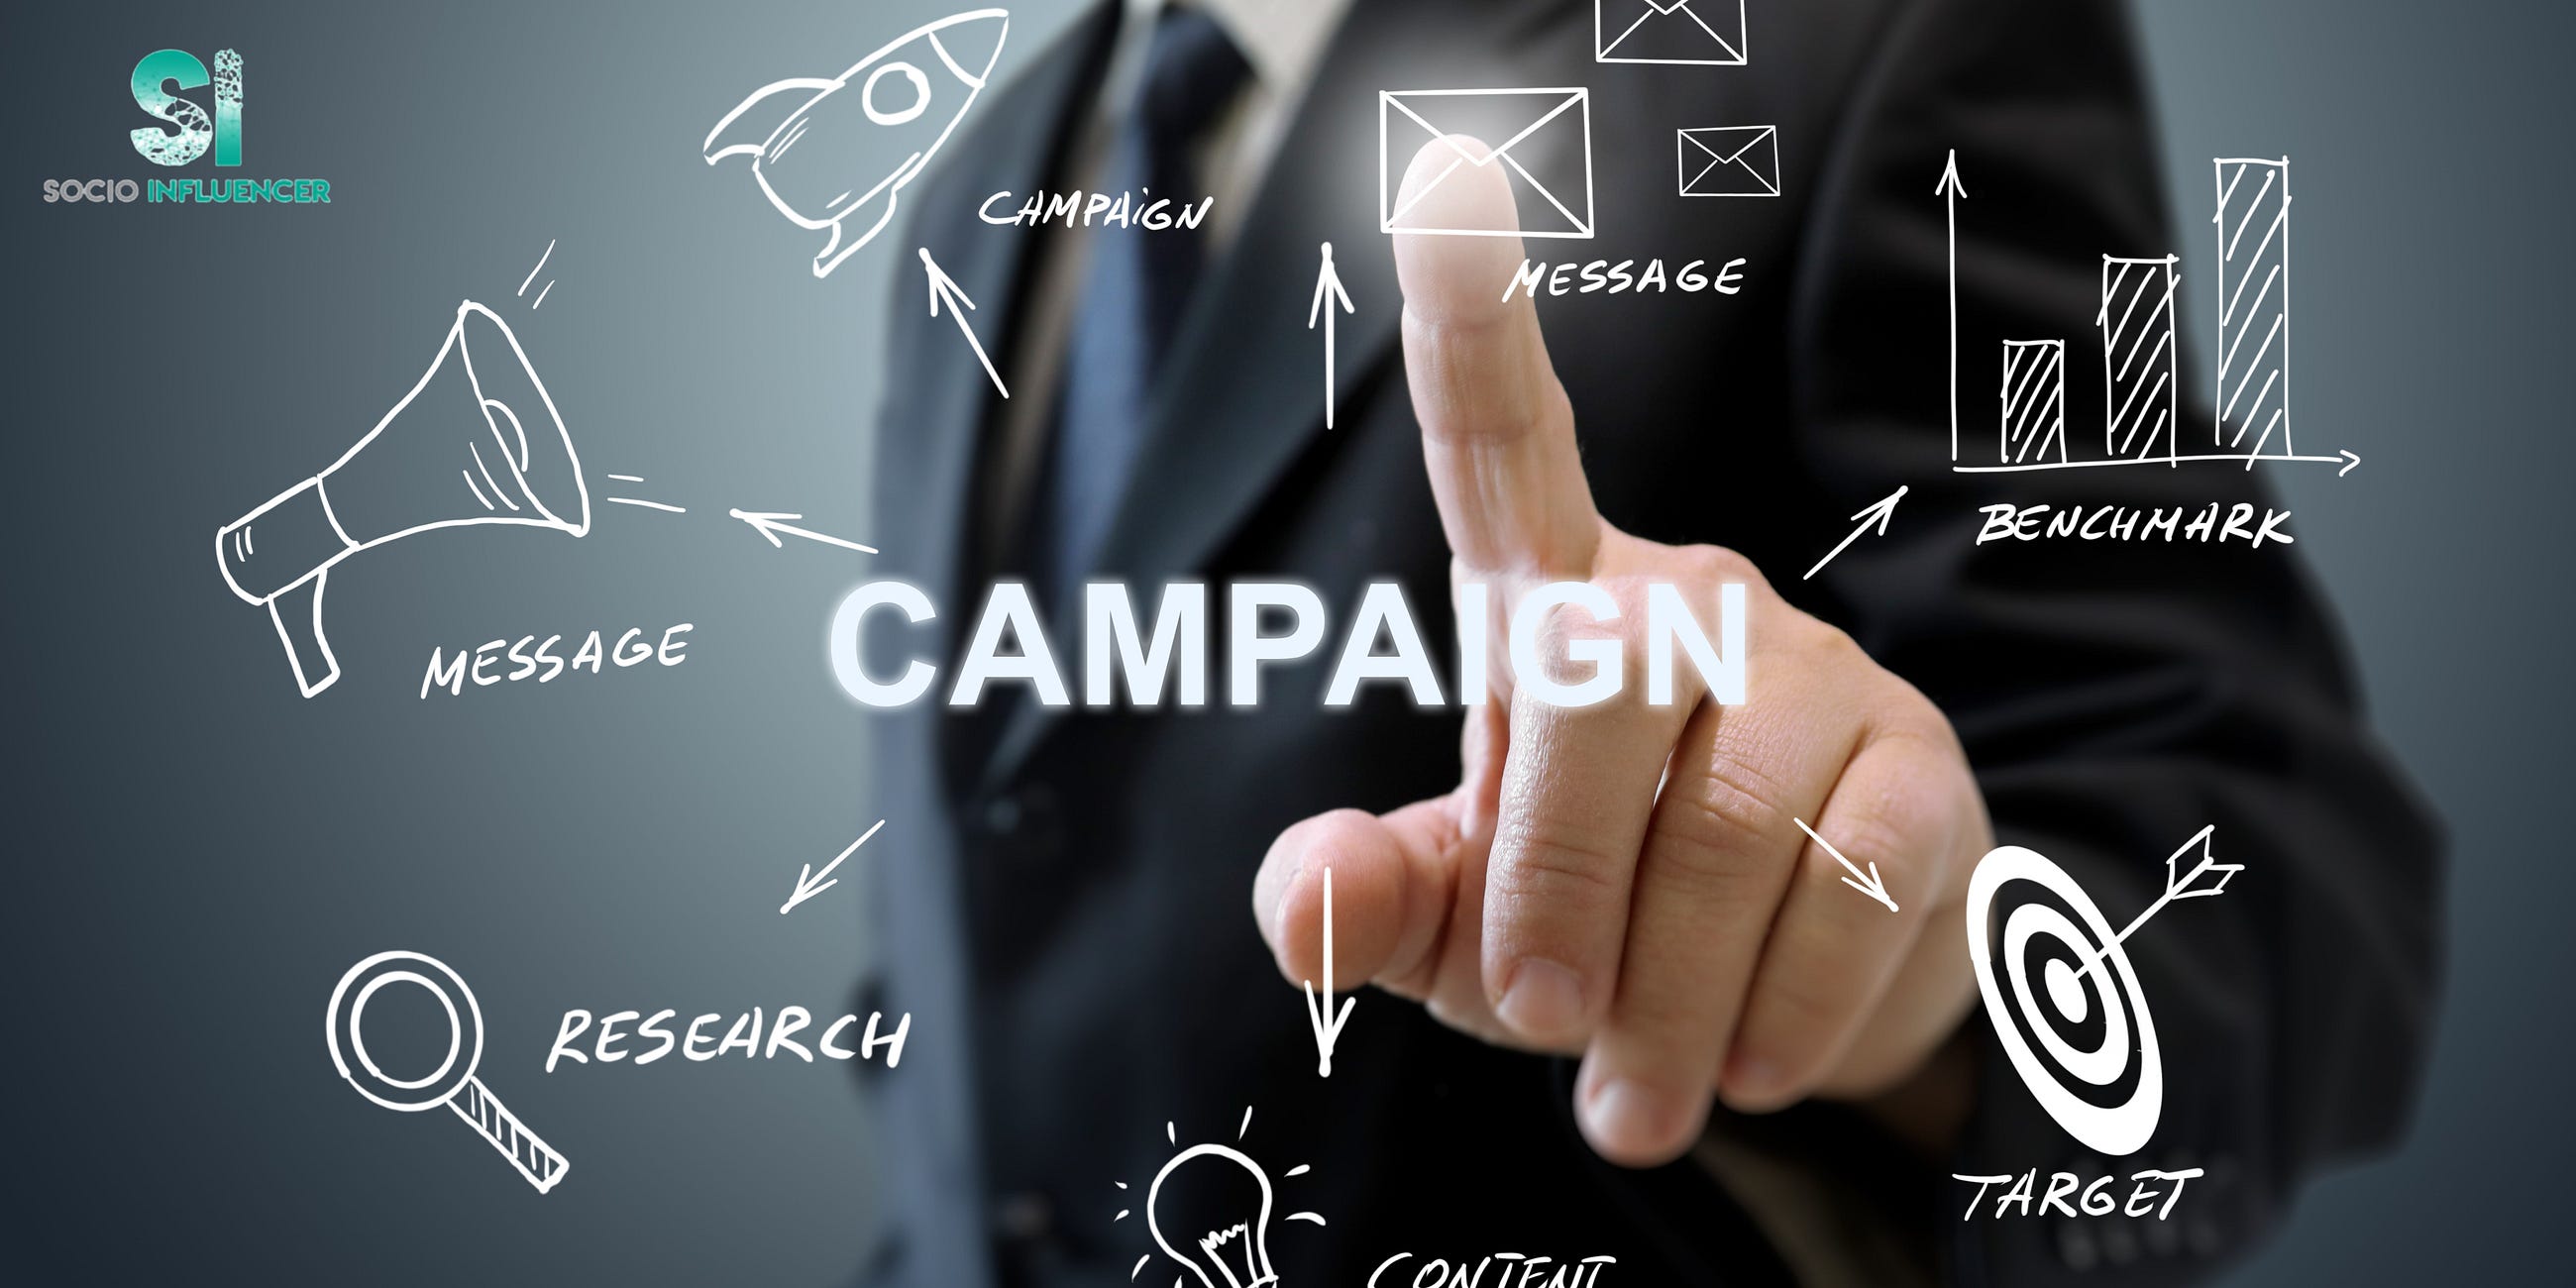 5 Best Influencer Marketing Campaigns | Socio Influencer